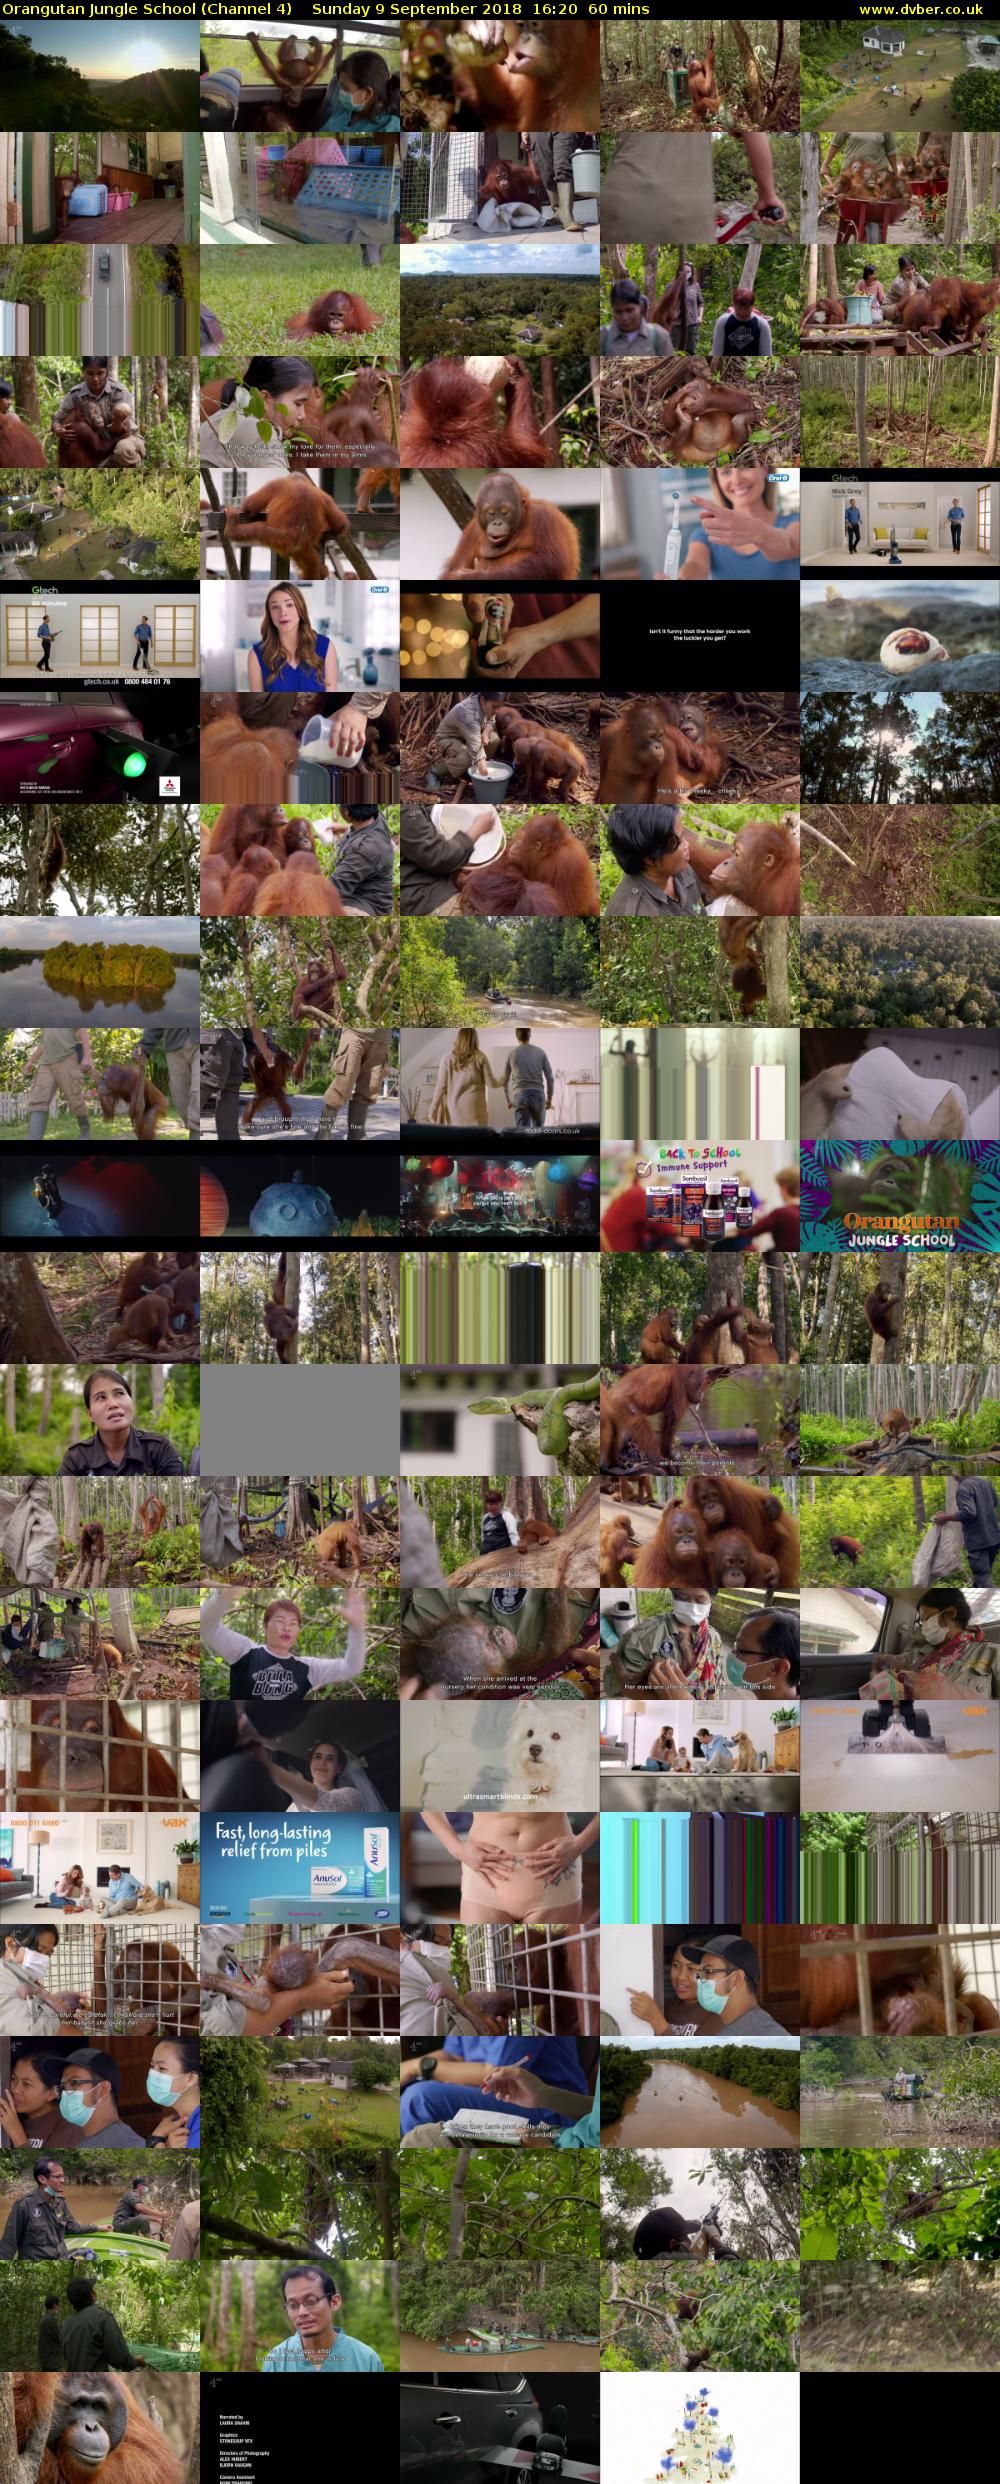 Orangutan Jungle School (Channel 4) Sunday 9 September 2018 16:20 - 17:20